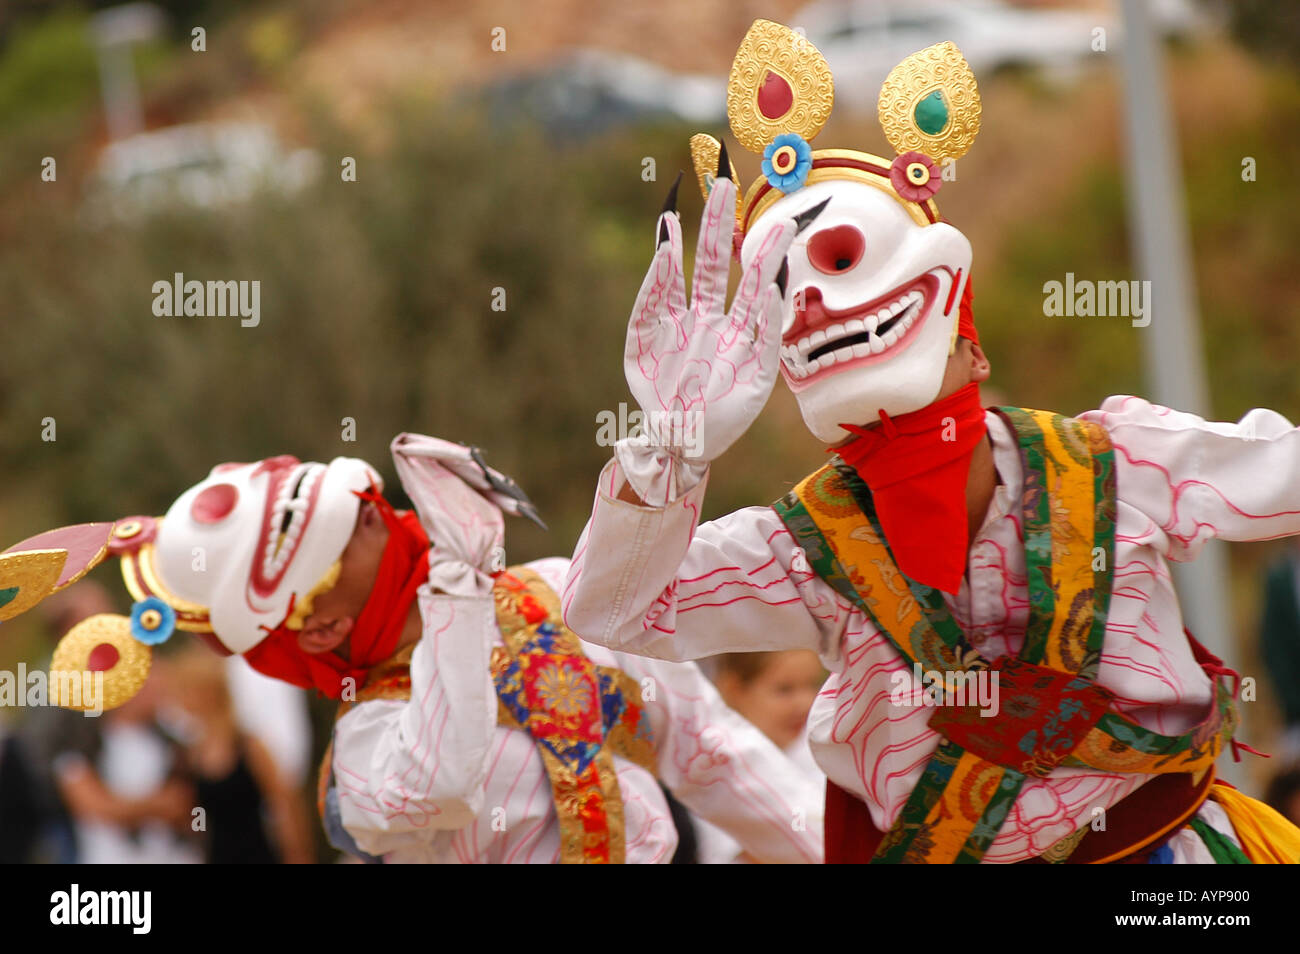 Lama danze di scheletro mask dance cham Foto stock - Alamy